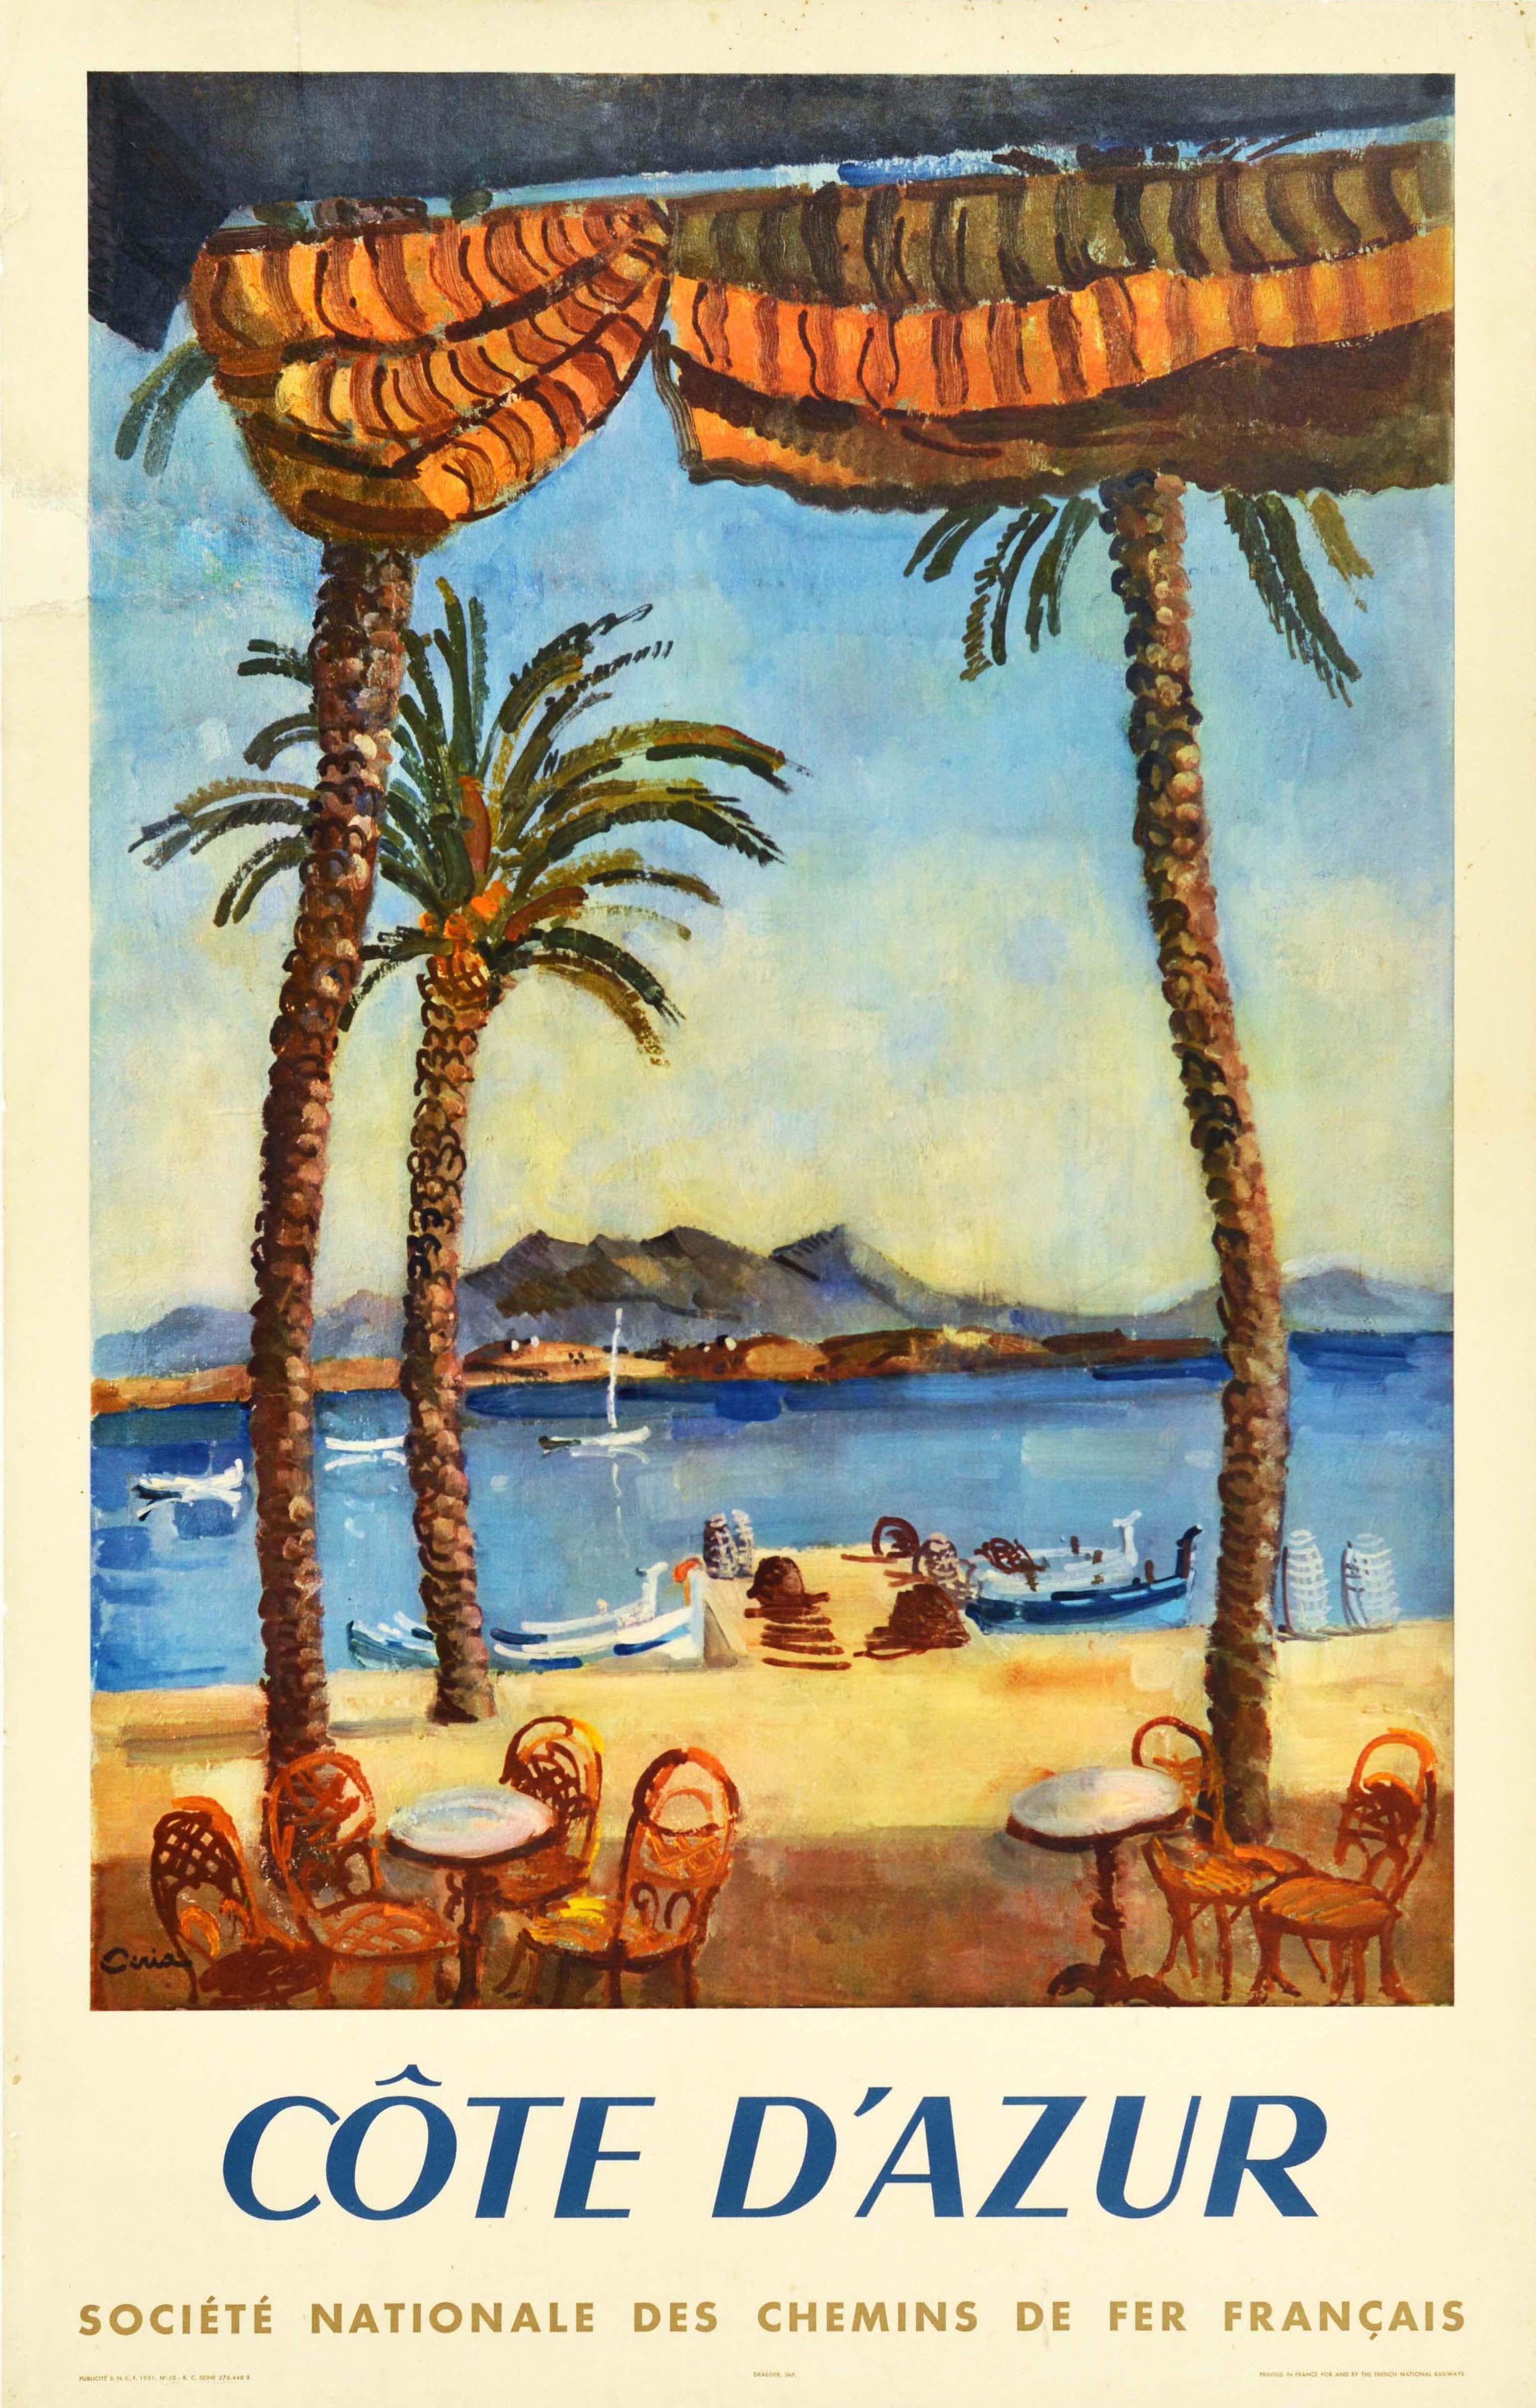 Edmond Céria Print - Original Vintage Rail Travel Poster Cote d'Azur French Riviera Mediterranean Sea